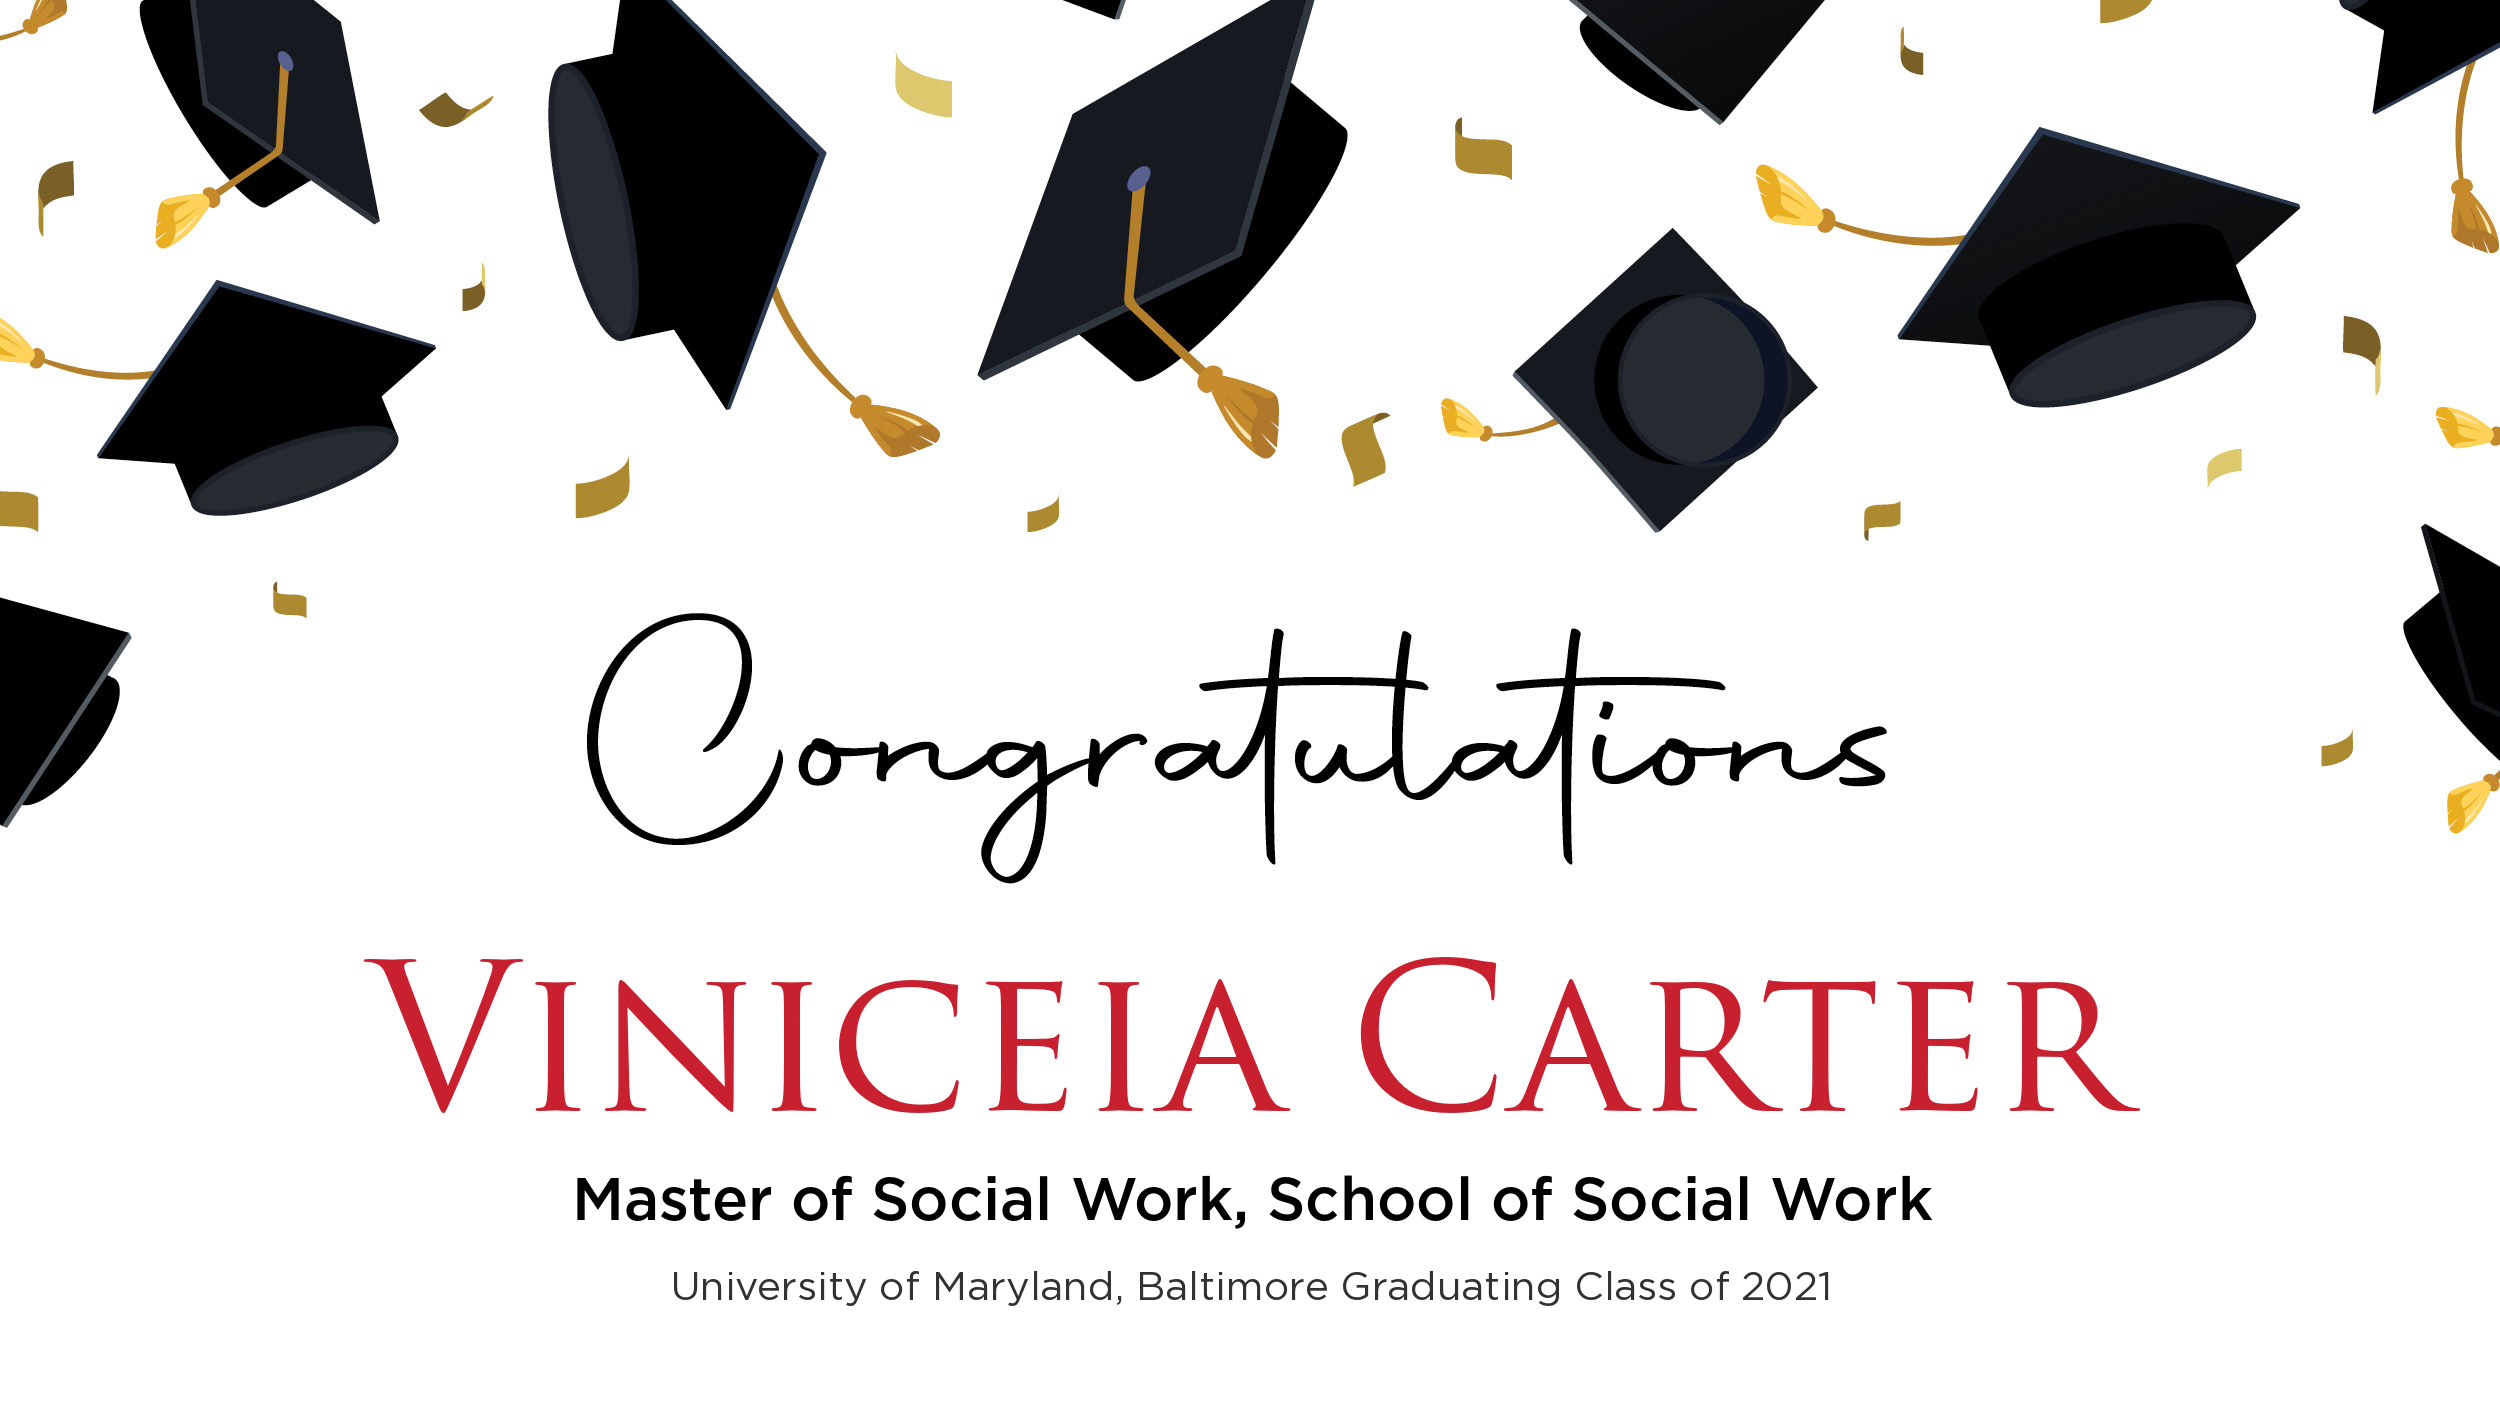 Congratulations Viniceia Carter, Master of Social Work